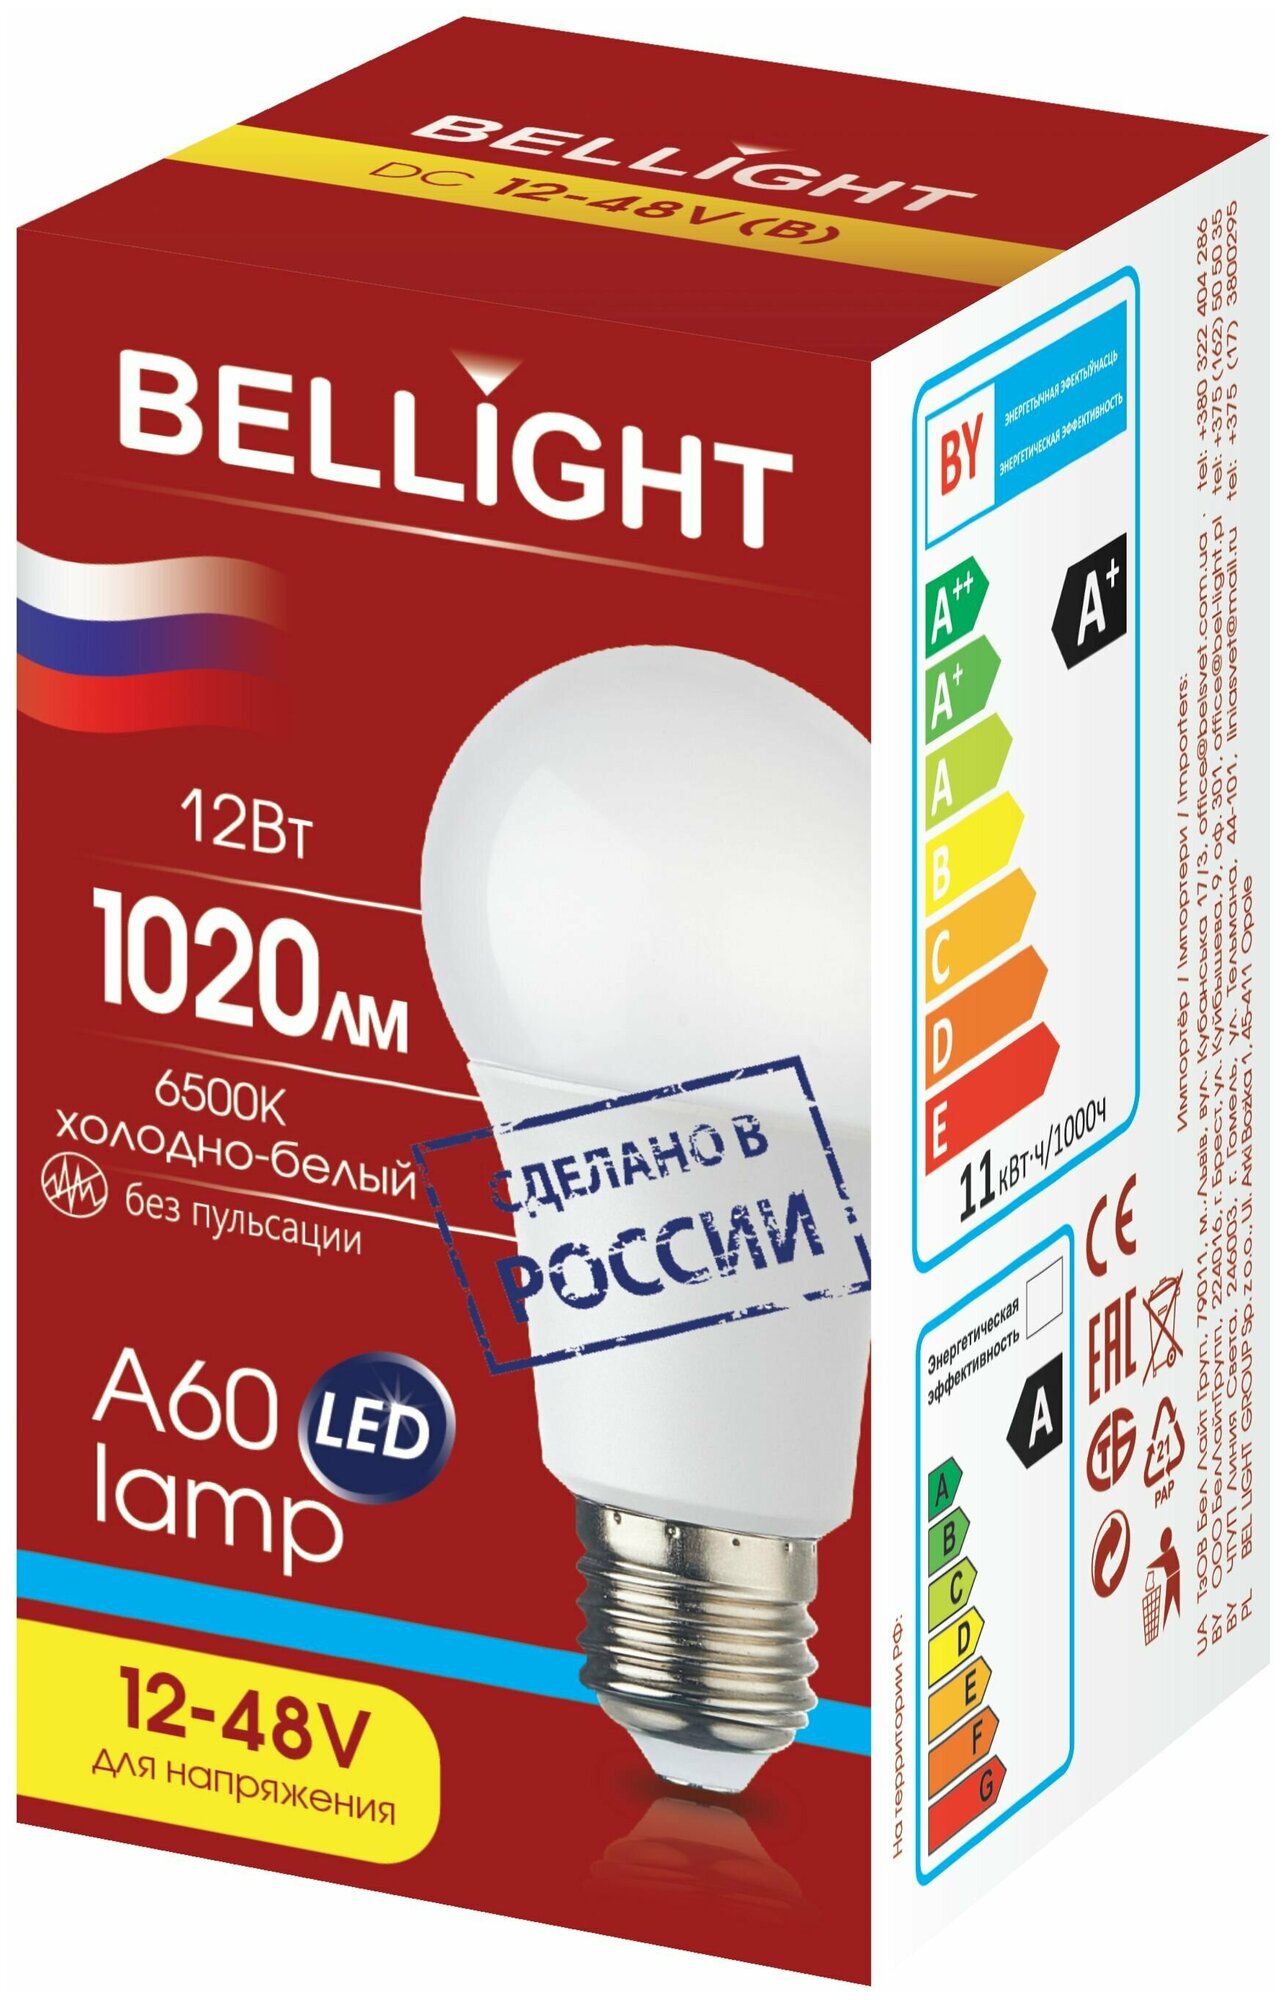 Лампа светодиодная низковольтная DC, А60 12W 6500K 12-48Вт, 1шт.